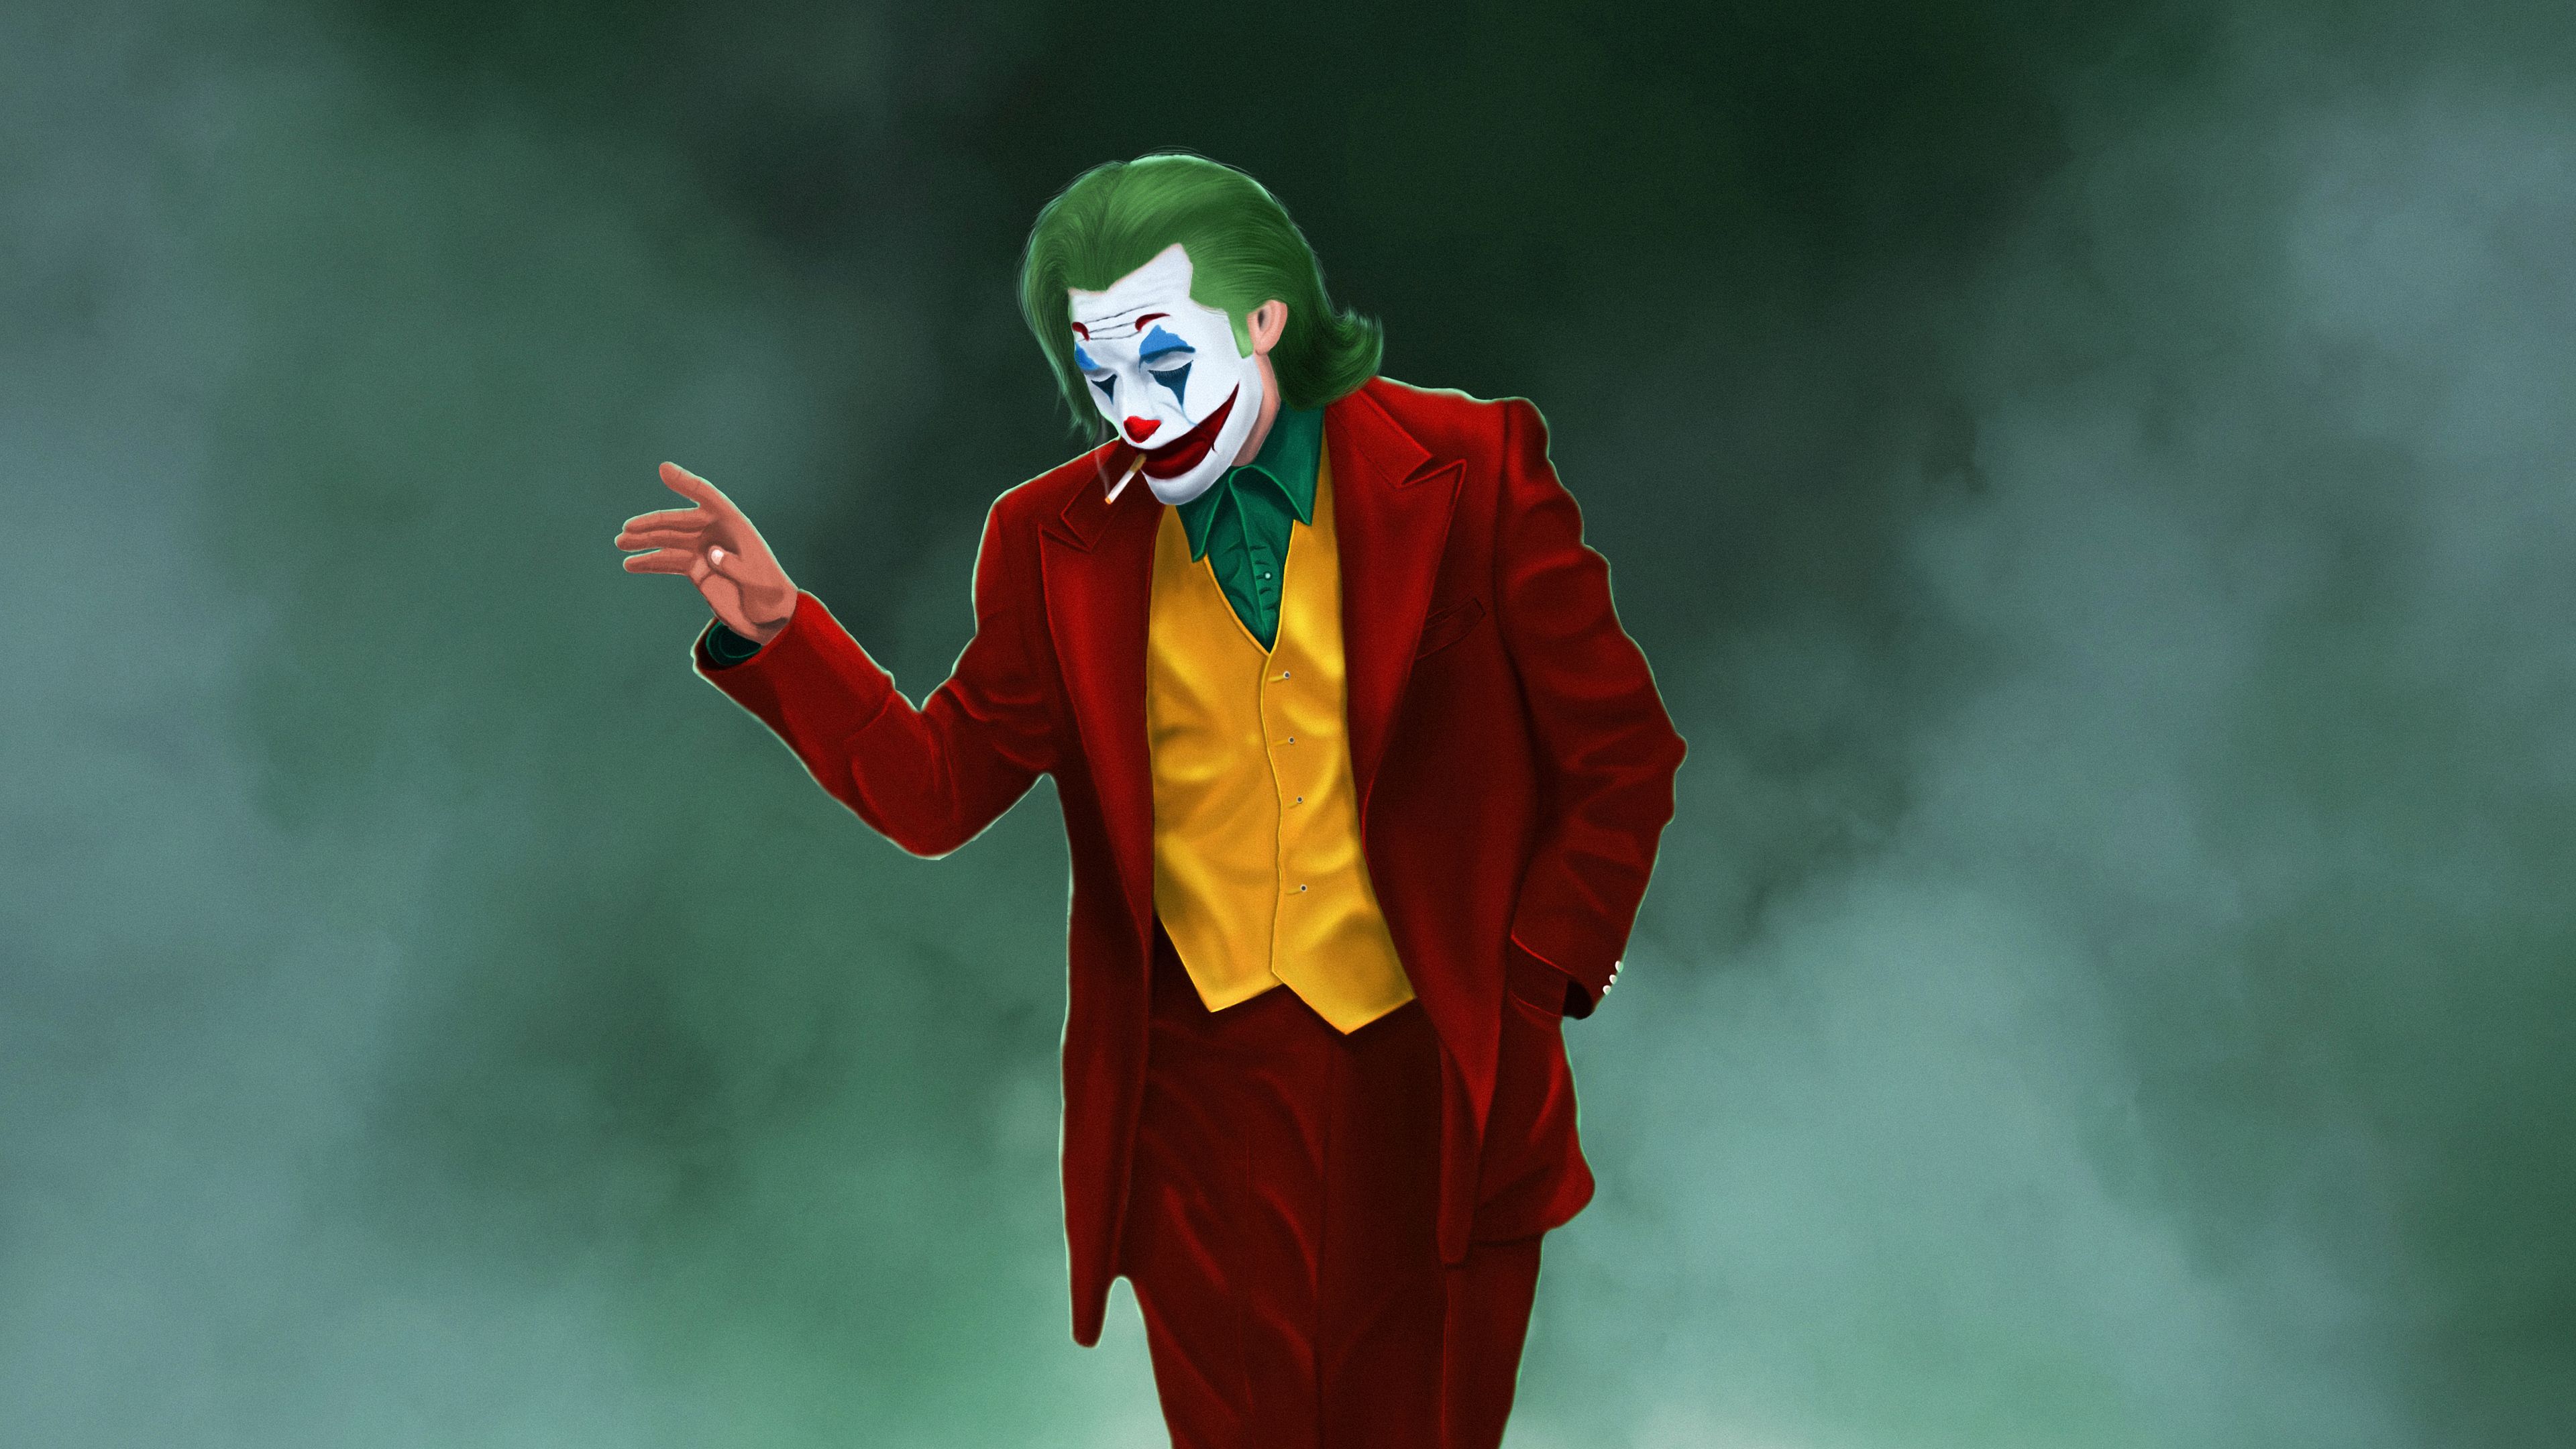 Joker Movie Wallpapers 4k Hd Joker Movie Backgrounds On Wallpaperbat